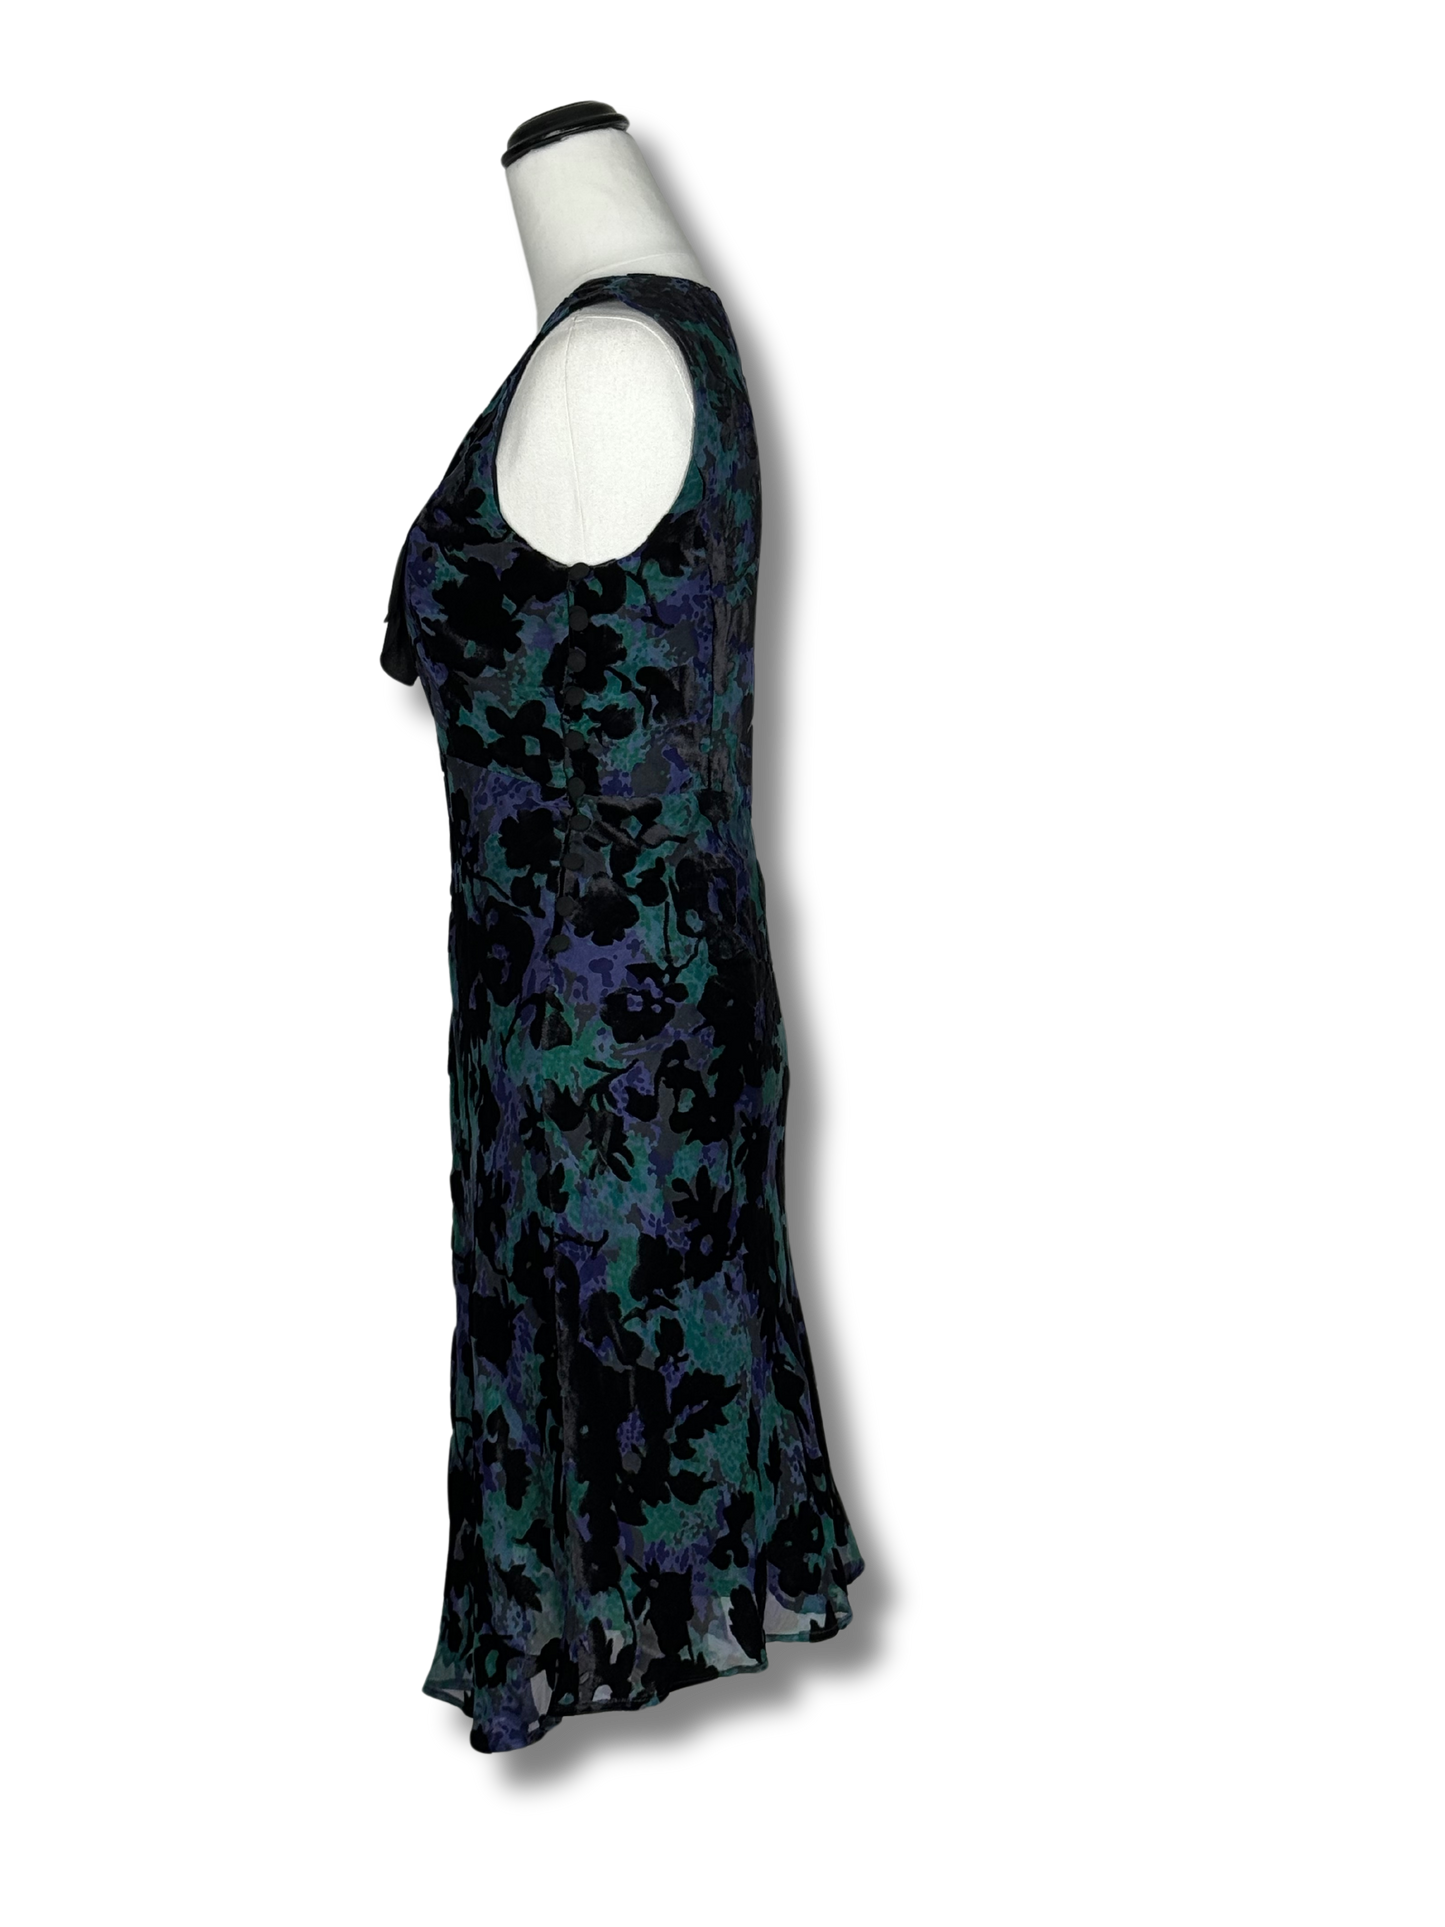 Alannah Hill Silk Sheath Dress in Blue & Black